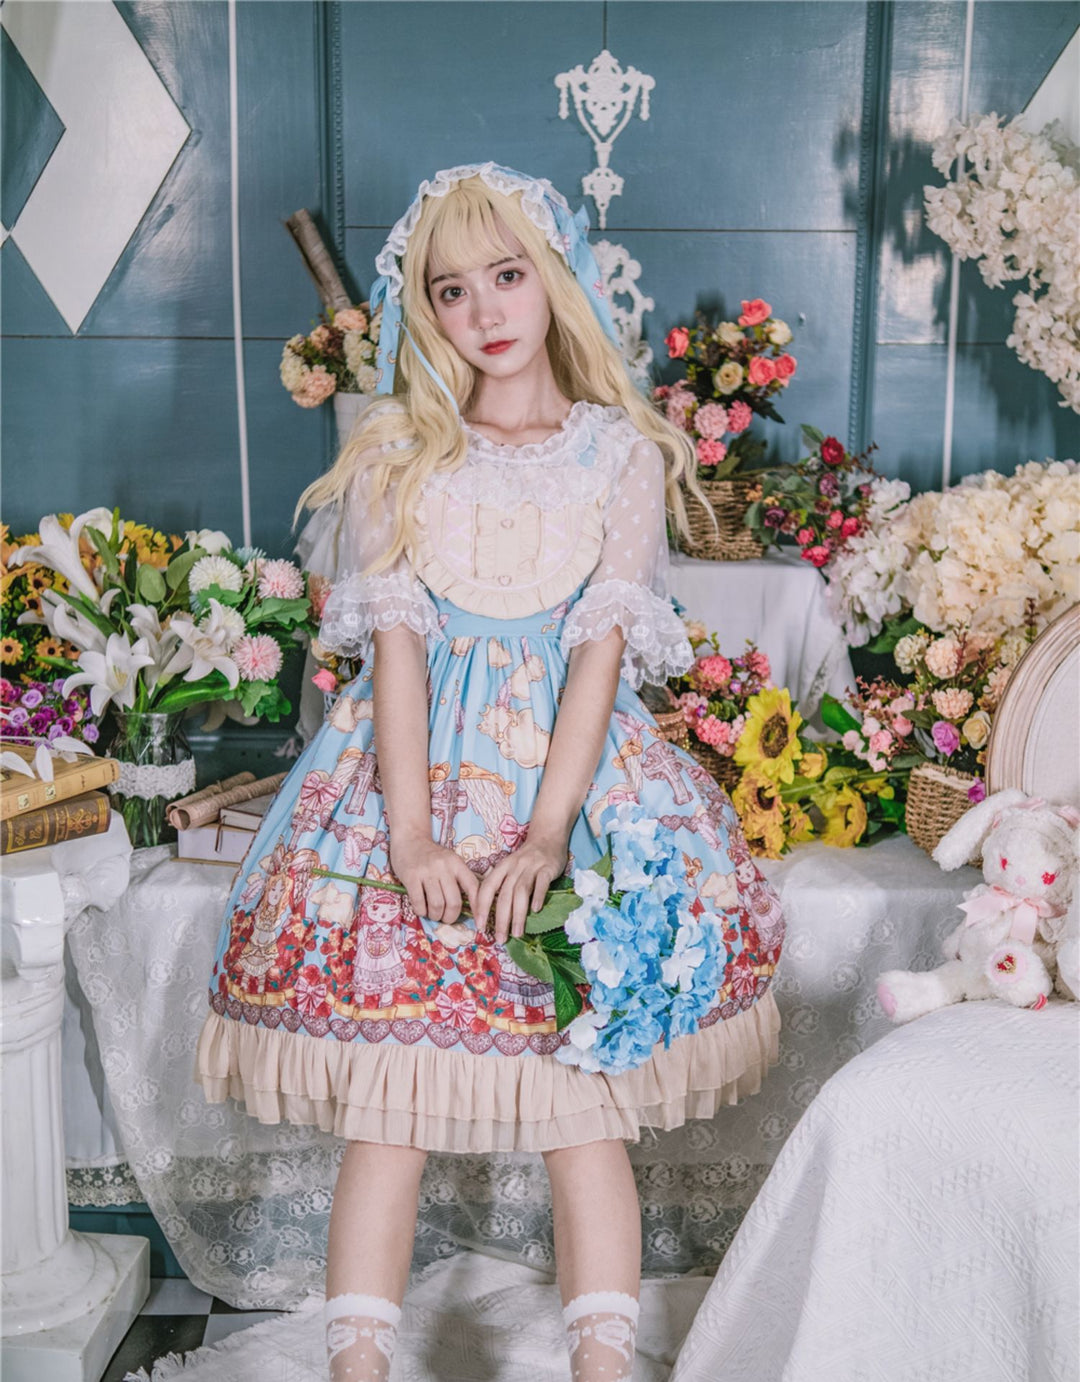 Niu Niu~Plus Size Lolita Shirt Lace Mesh Blouse   